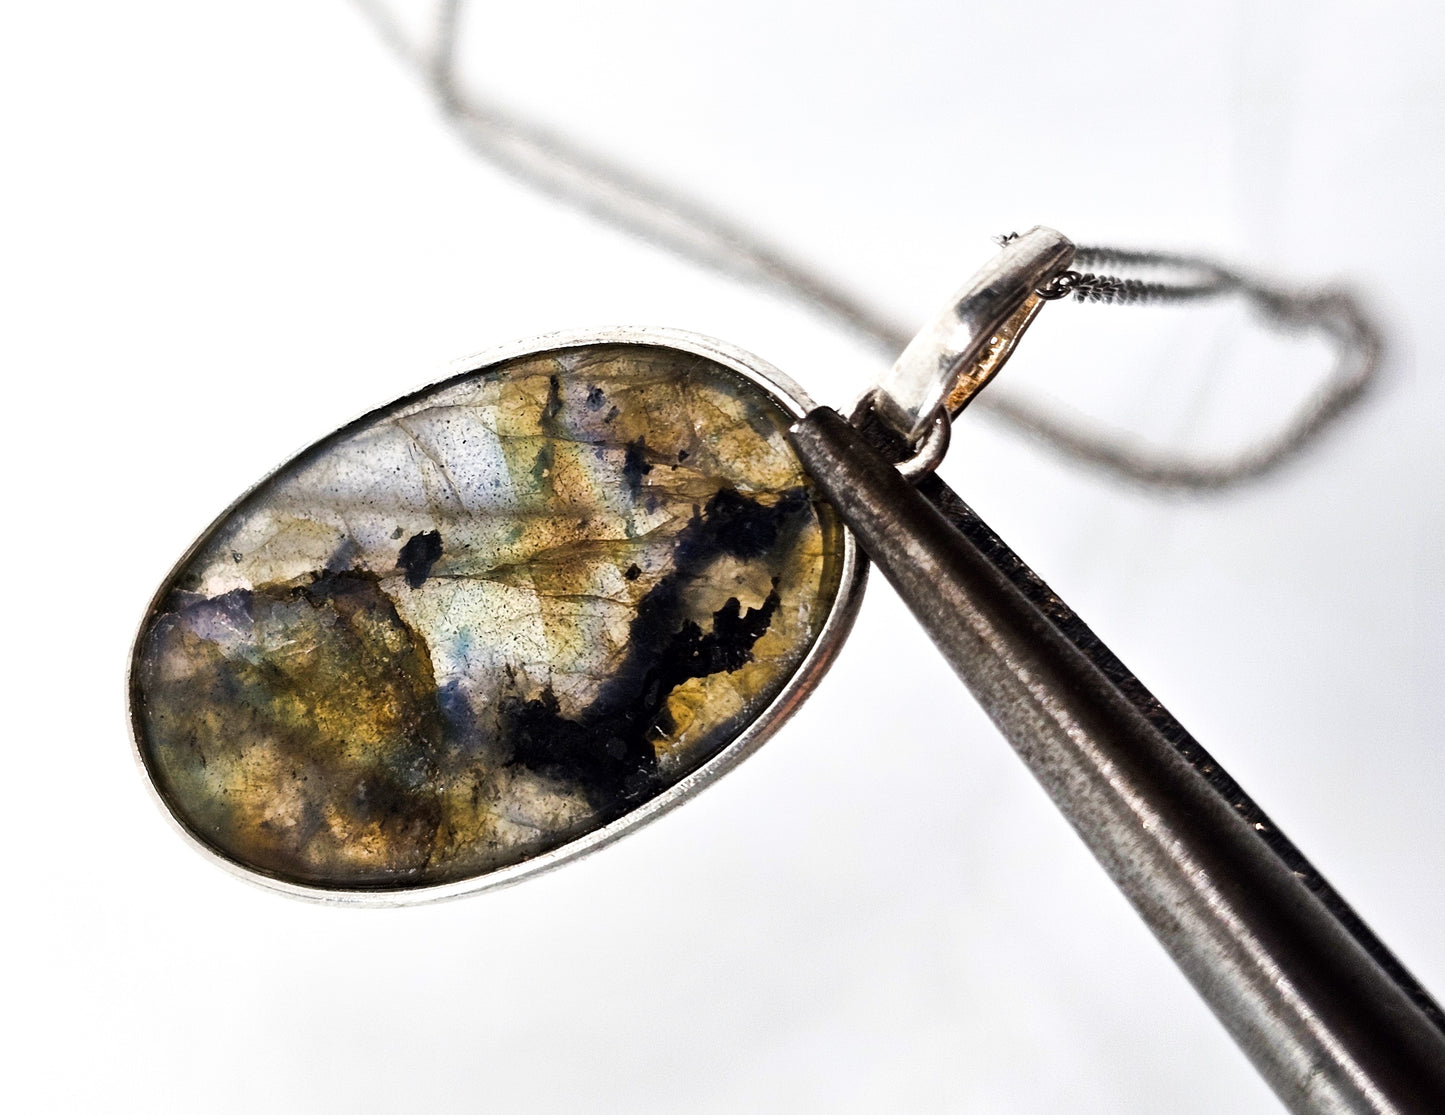 Labradorite flashy rainbow gemstone sterling silver pendant necklace